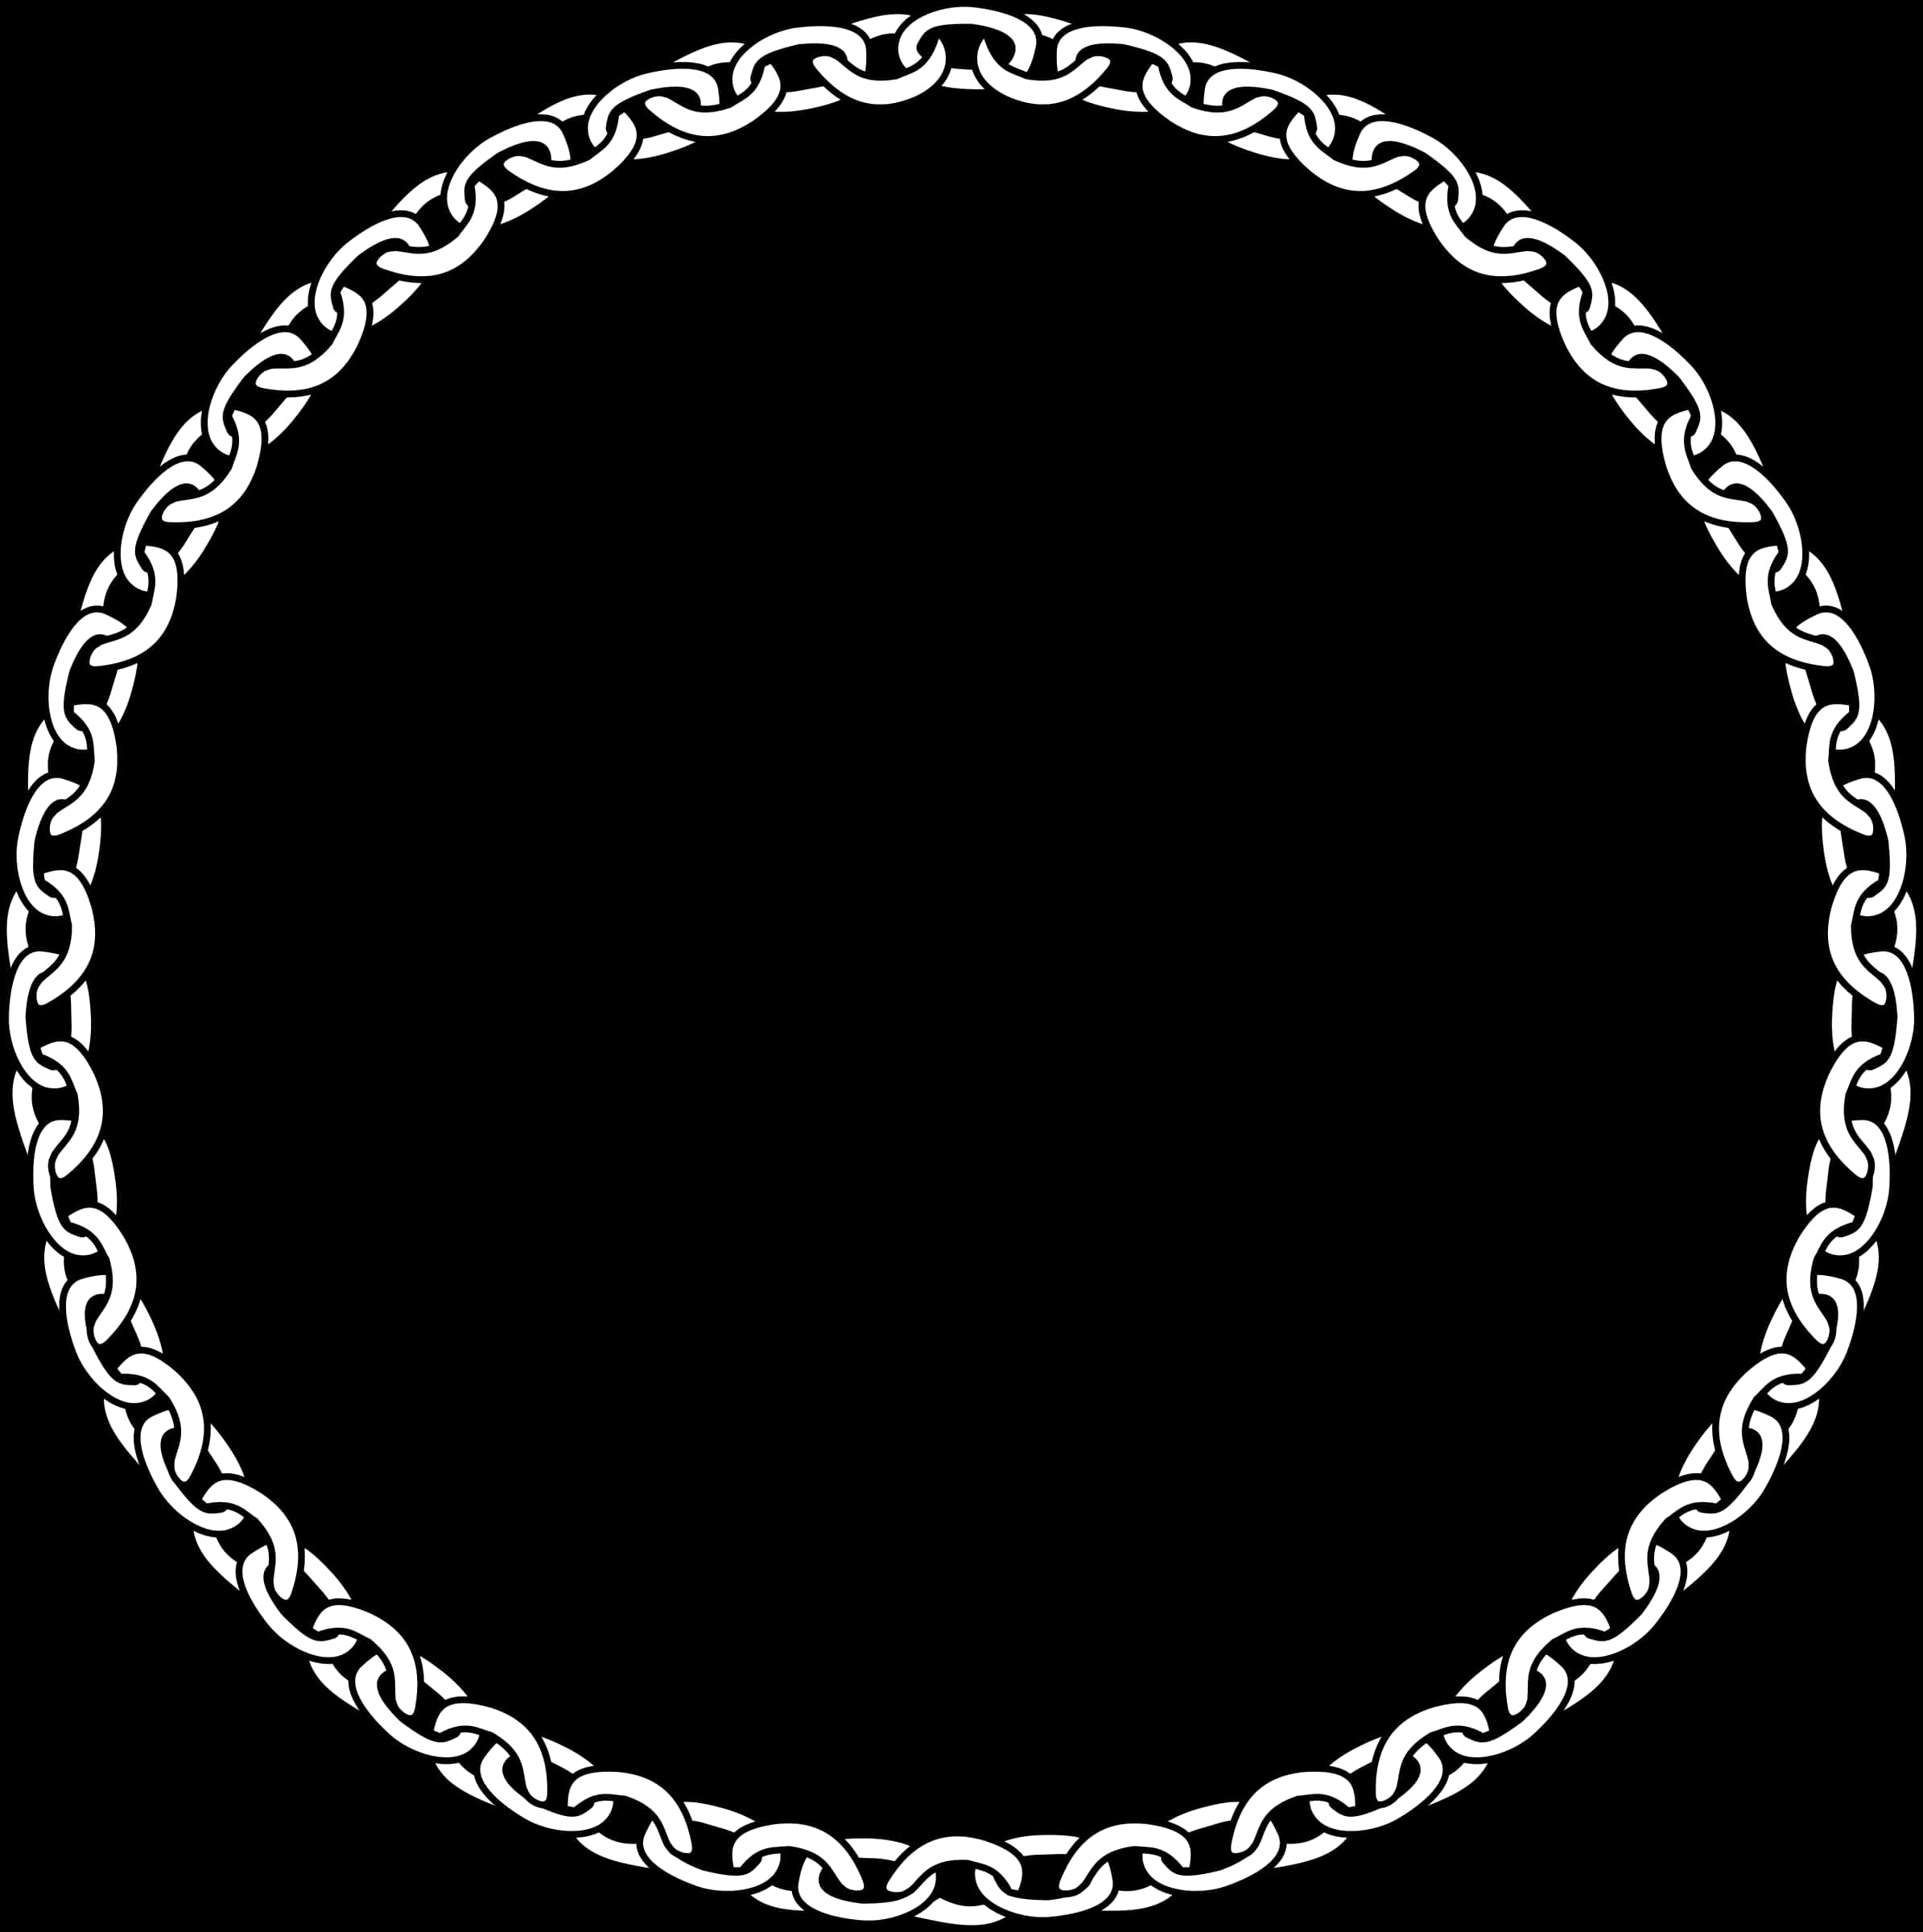 A Circular White Chain On A Black Background